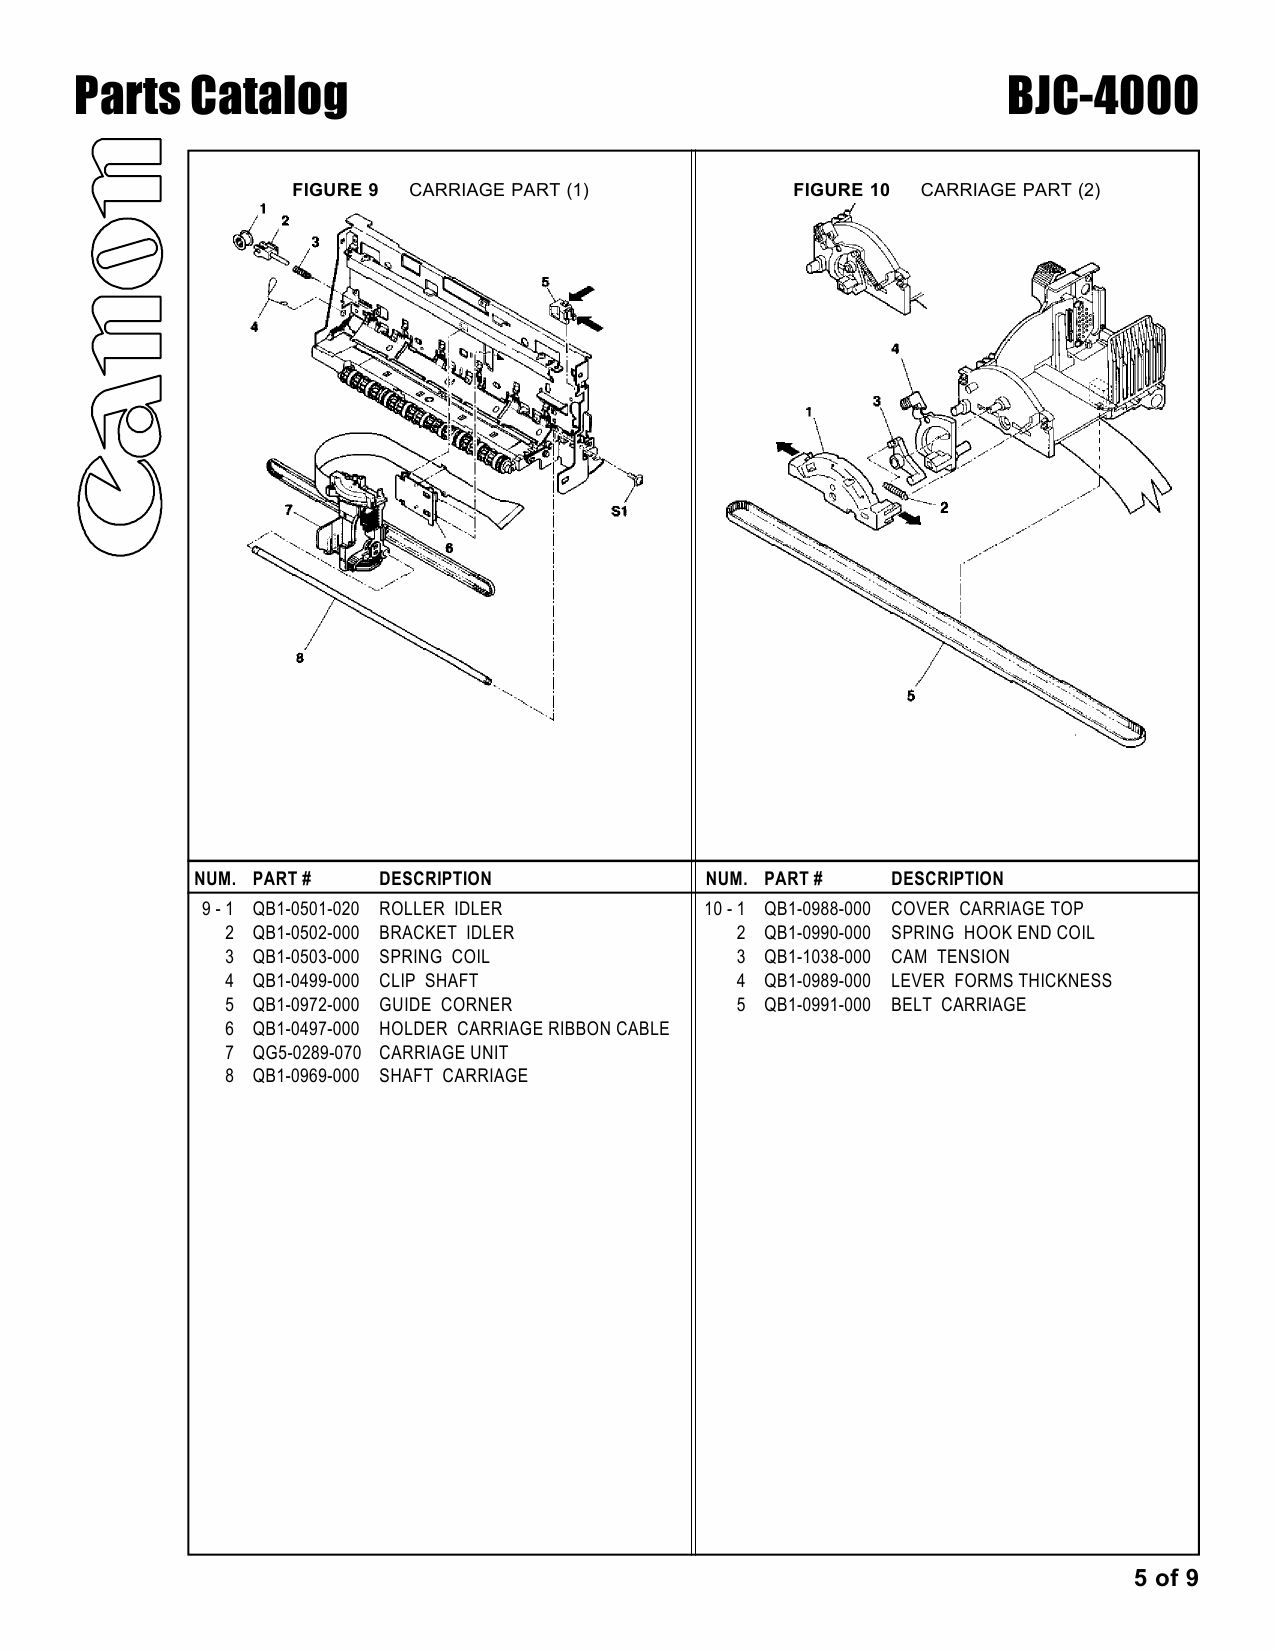 Canon BubbleJet BJC-4000 Parts Catalog Manual-5